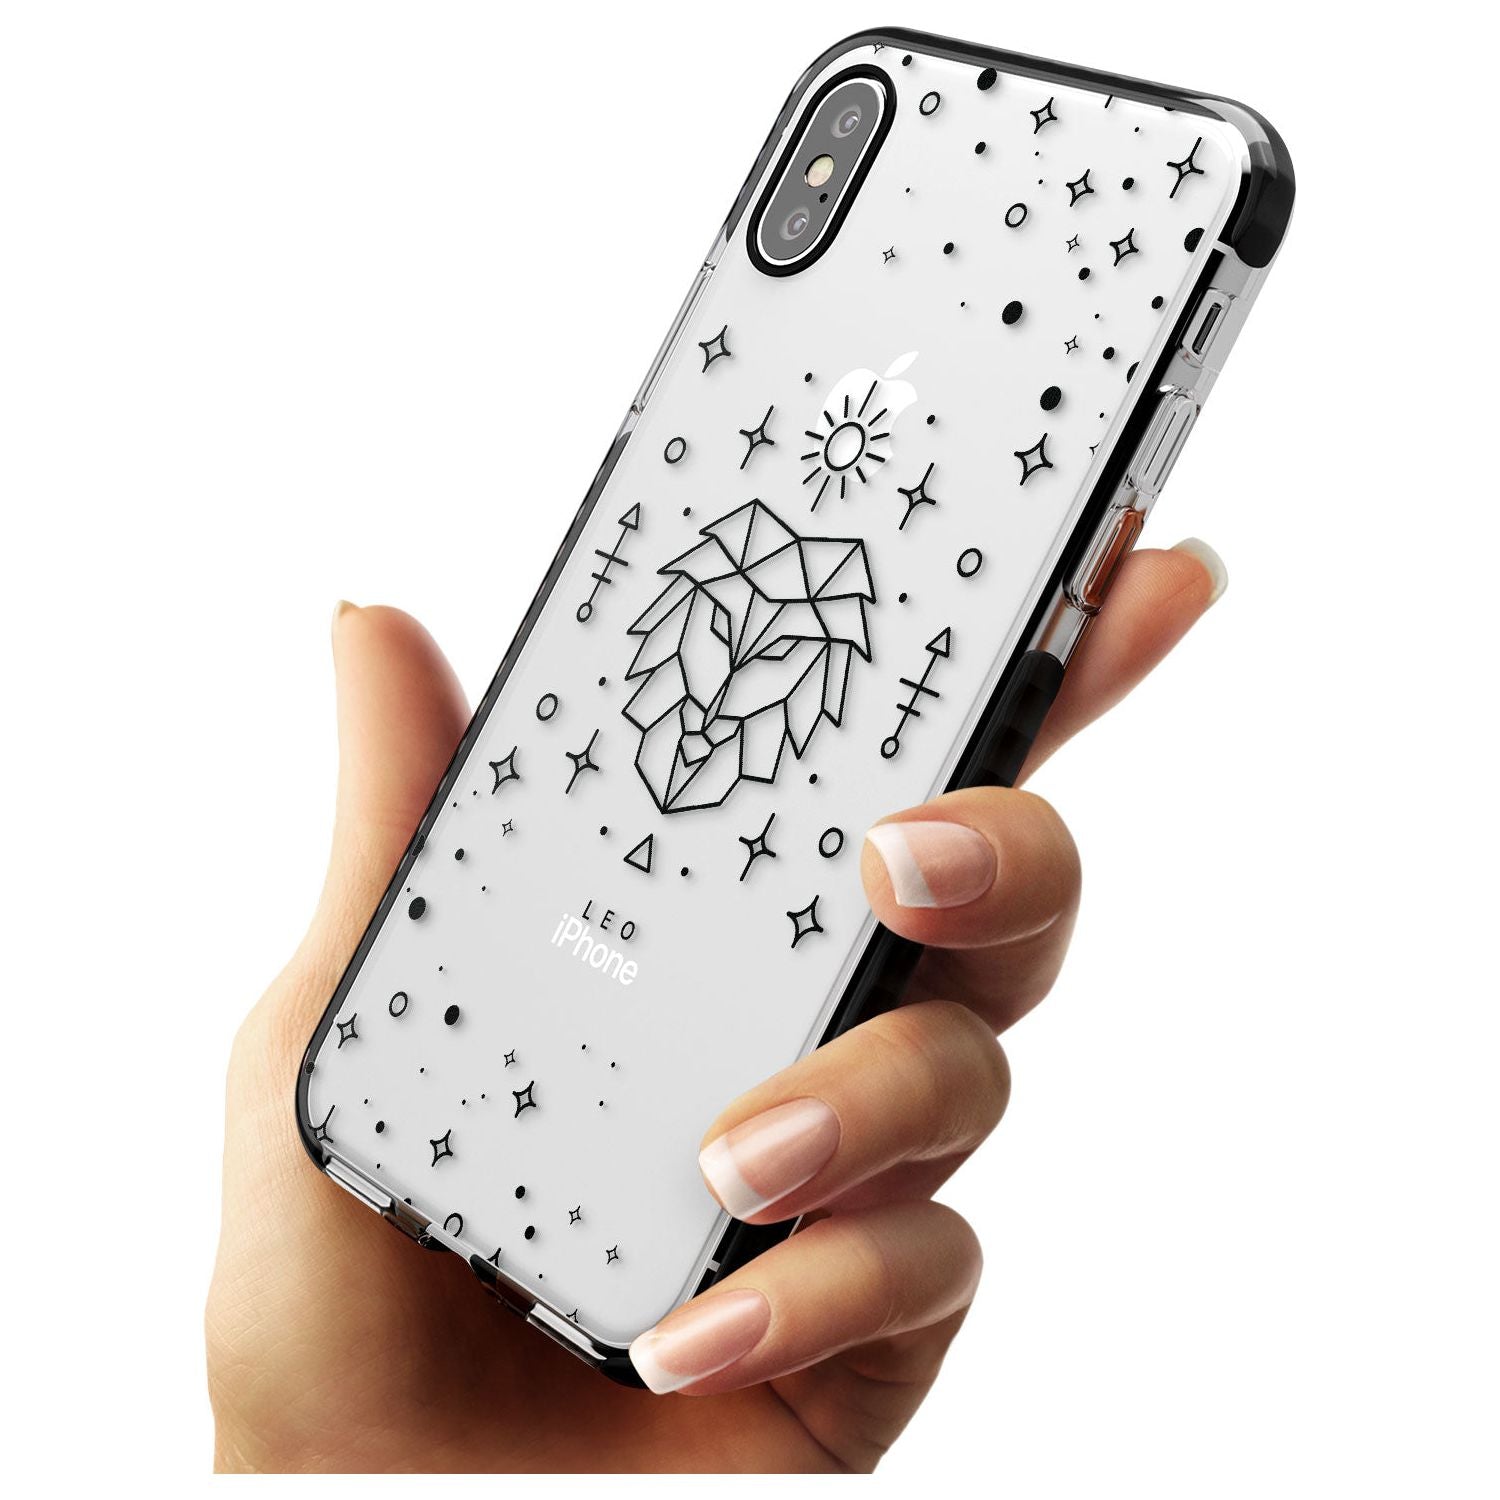 Leo Emblem - Transparent Design Black Impact Phone Case for iPhone X XS Max XR